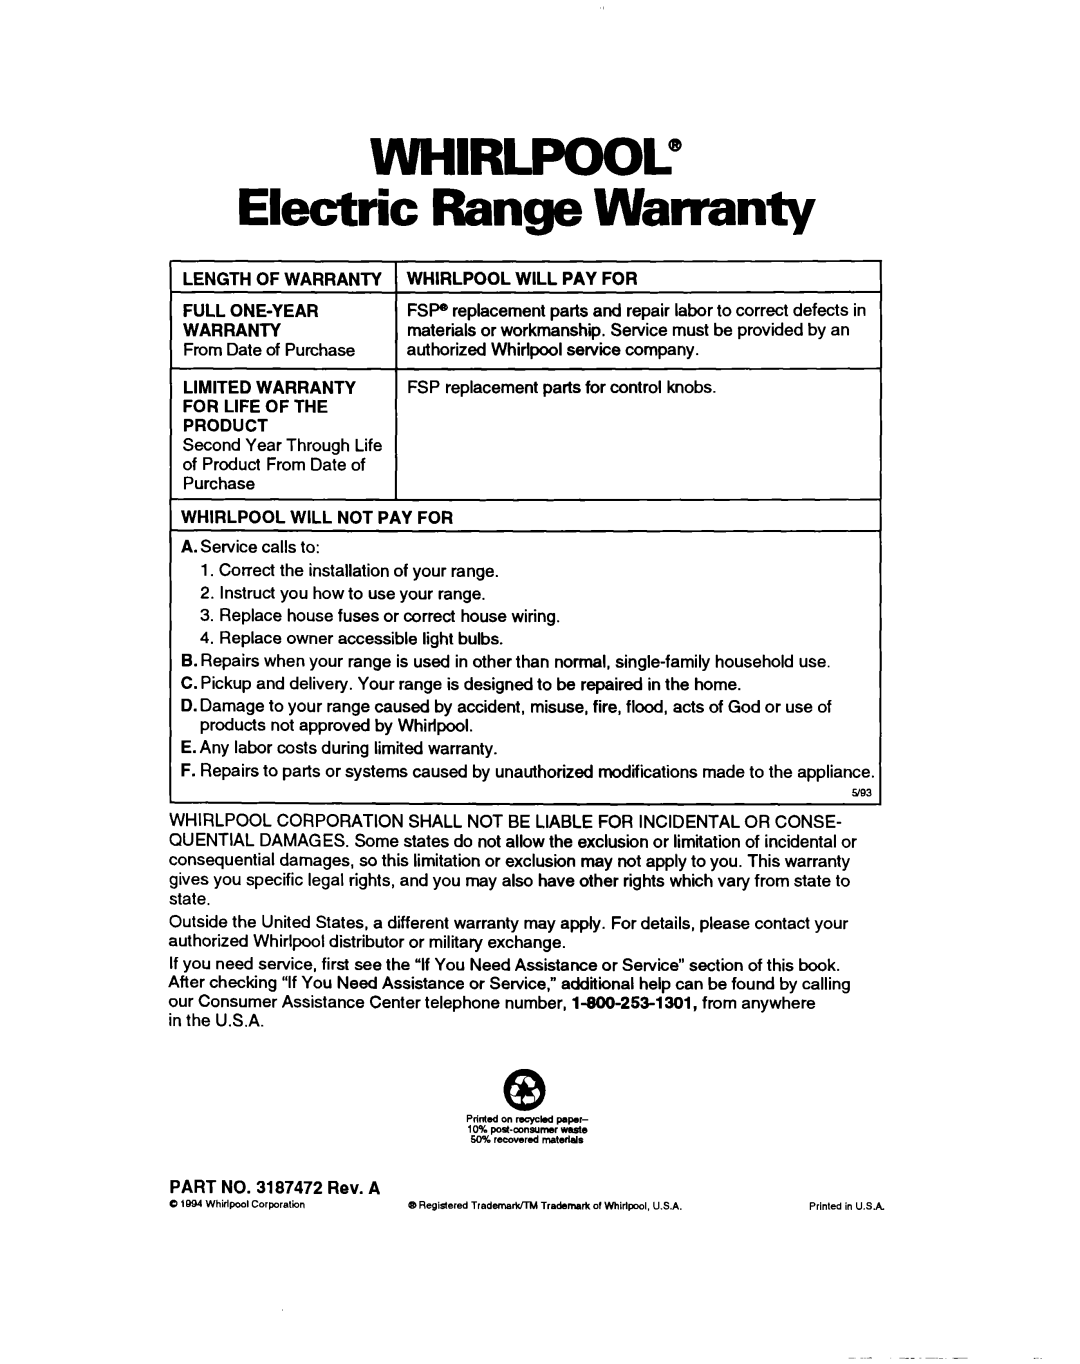 Whirlpool RF350BXB, RF3600XY WHIRLPOOL” Electric Range Warranty, Length Of Warranty Whirlpool Will Pay For, Full One-Year 